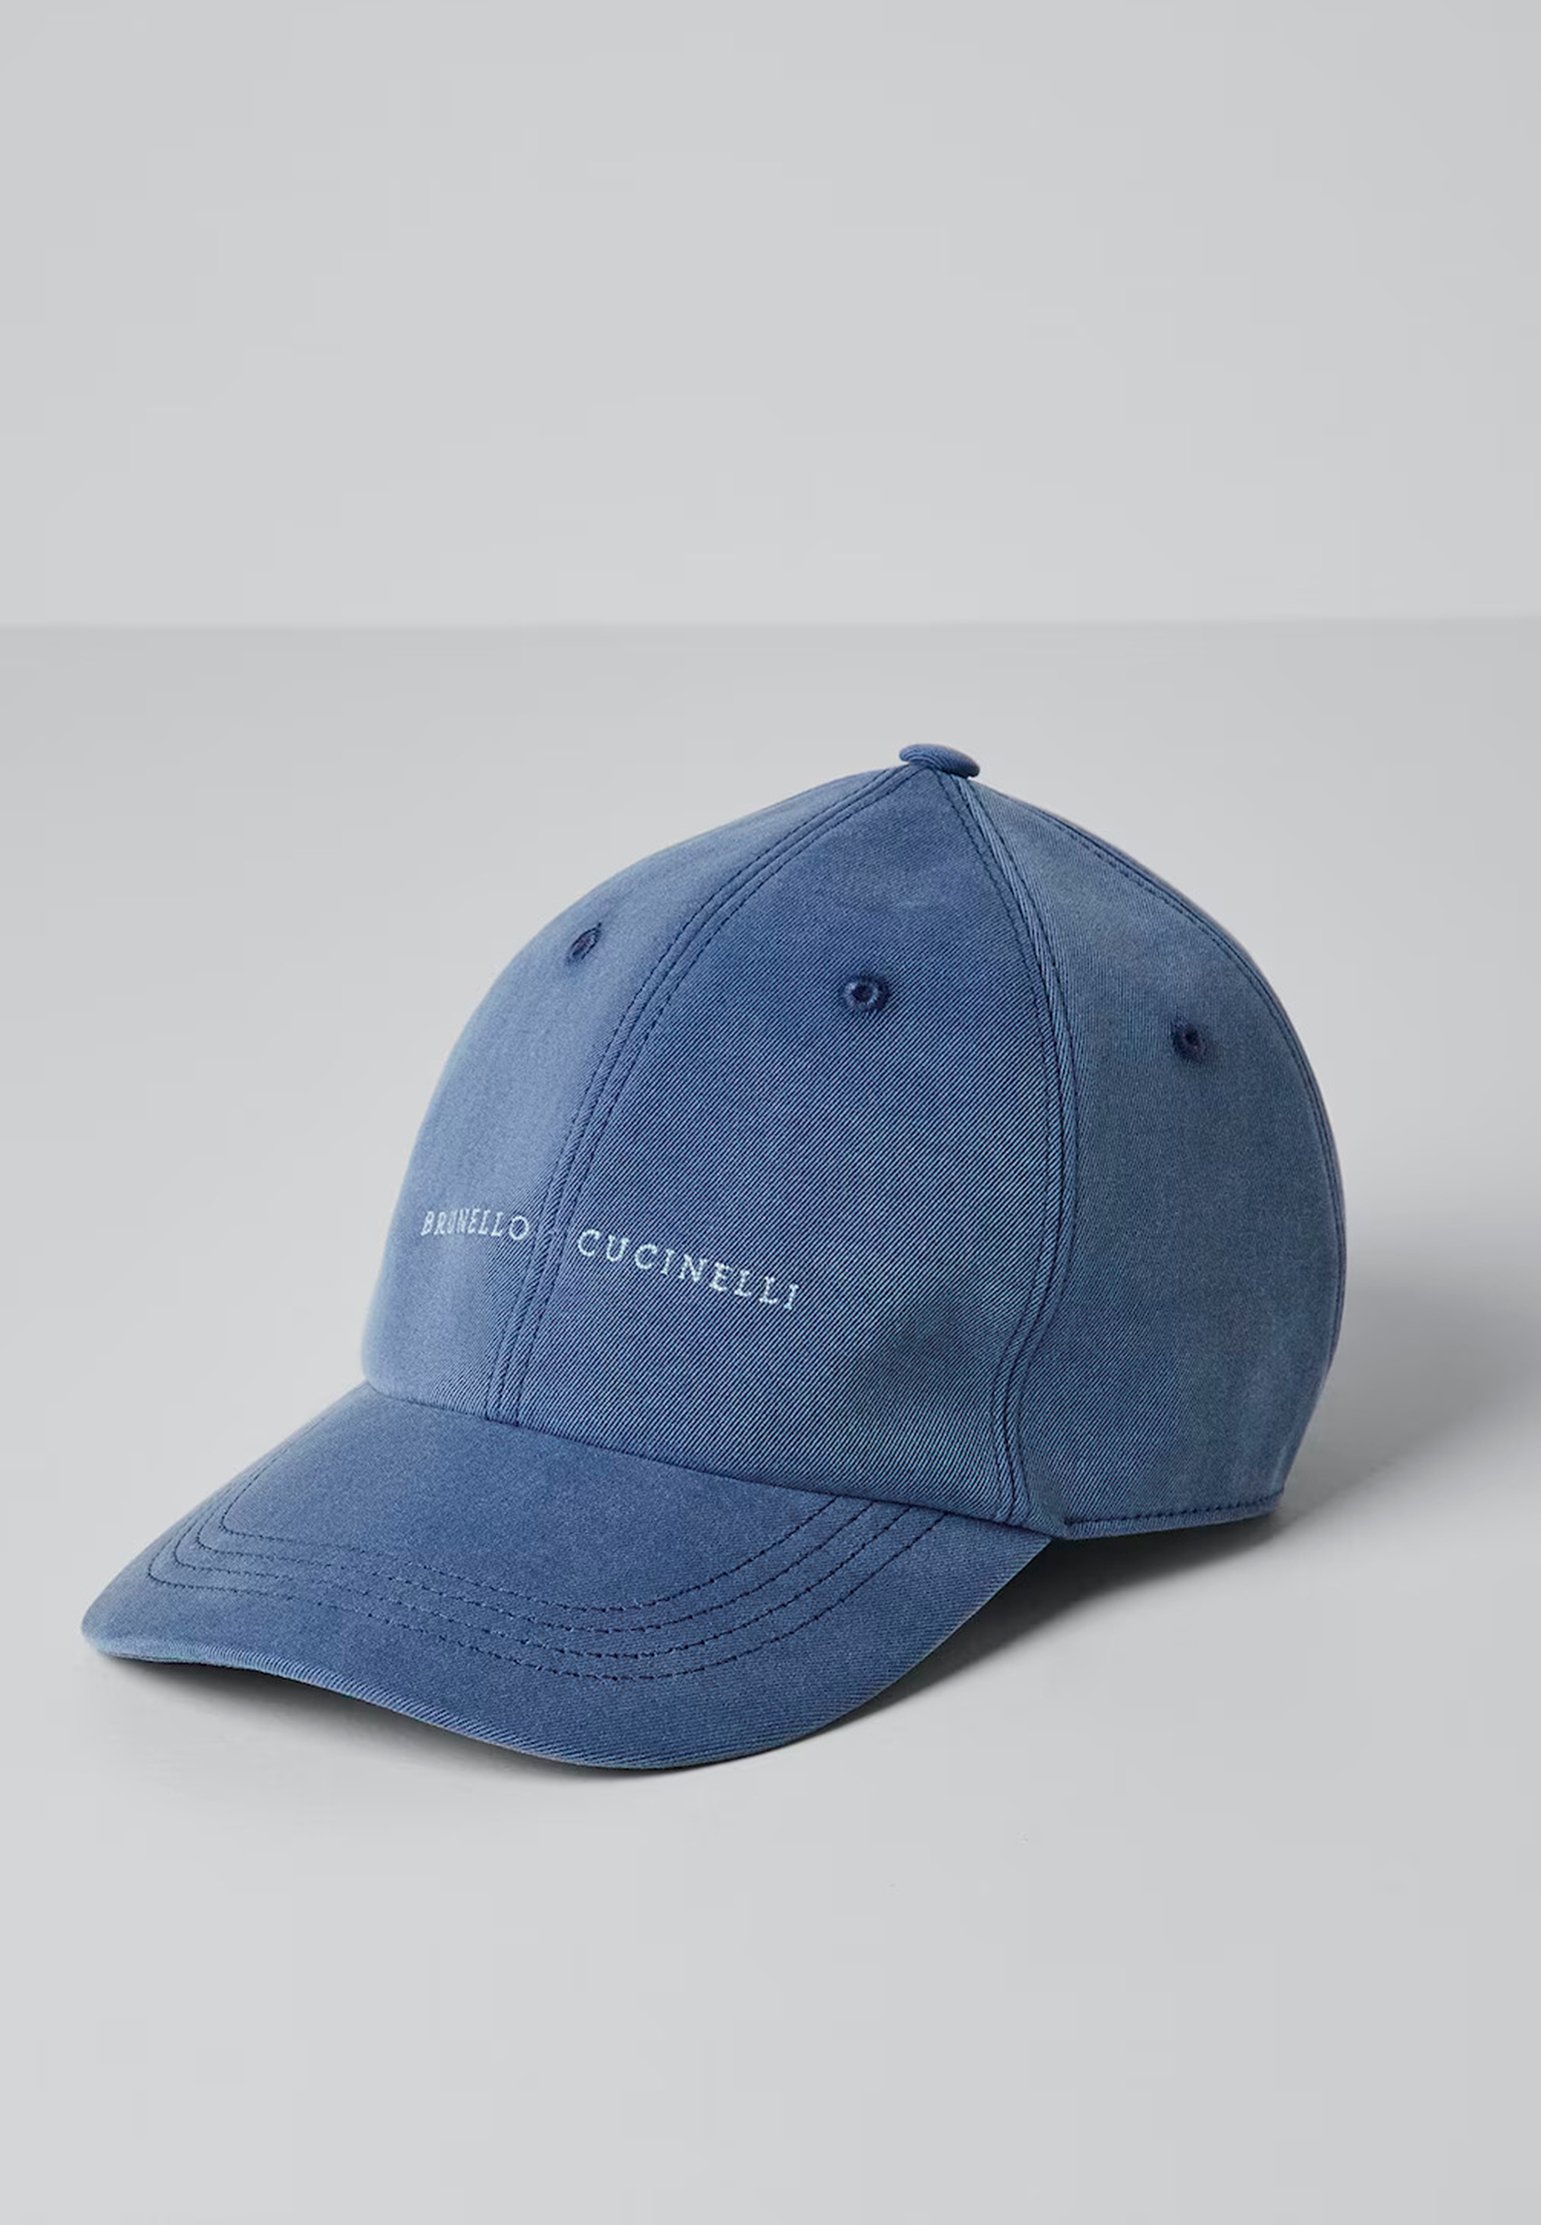 Bonnet BRUNELLO CUCINELLI Color: blue (Code: 1520) in online store Allure